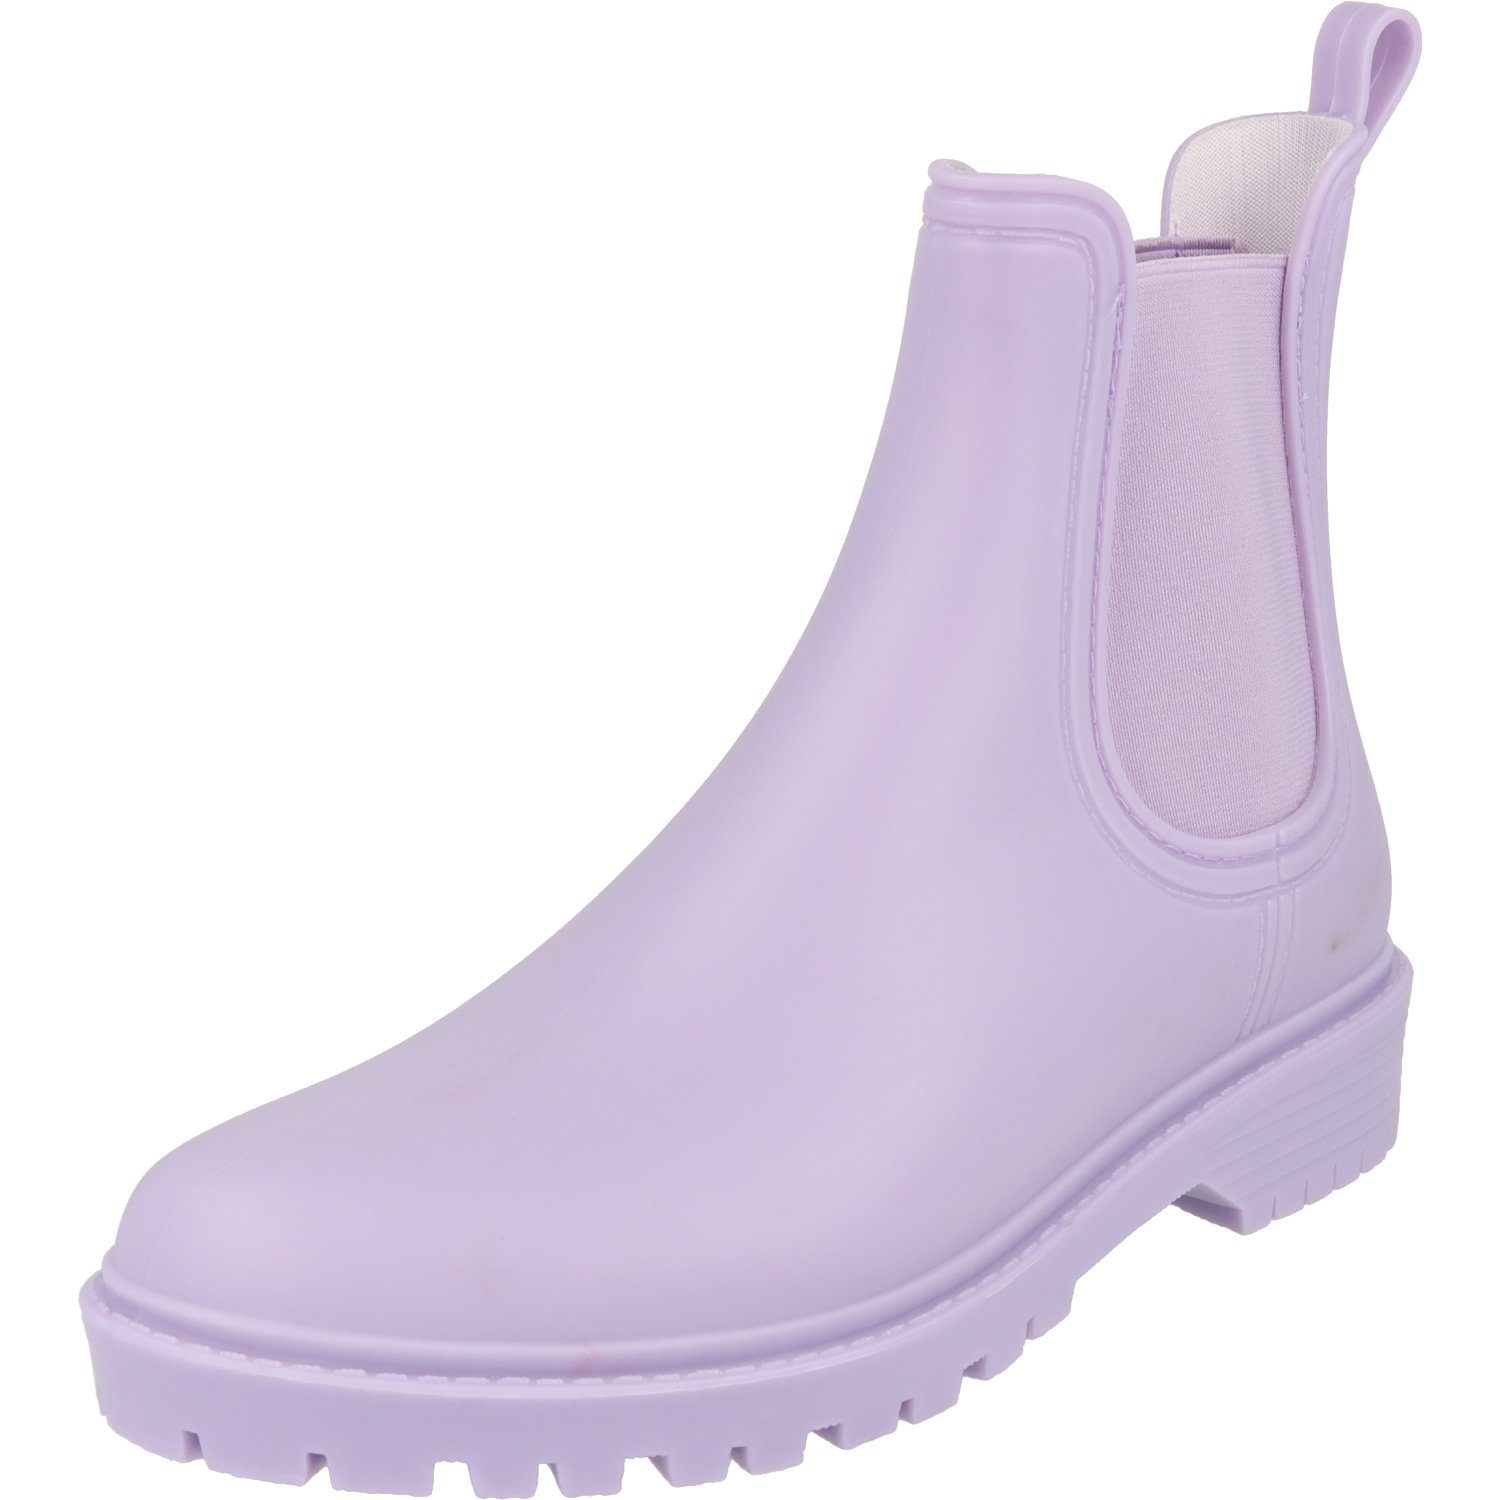 Damen Gerli Gummistiefelette Wasserdicht Schuhe Violett by 51ME201 Wasserdicht Dockers Chelsea